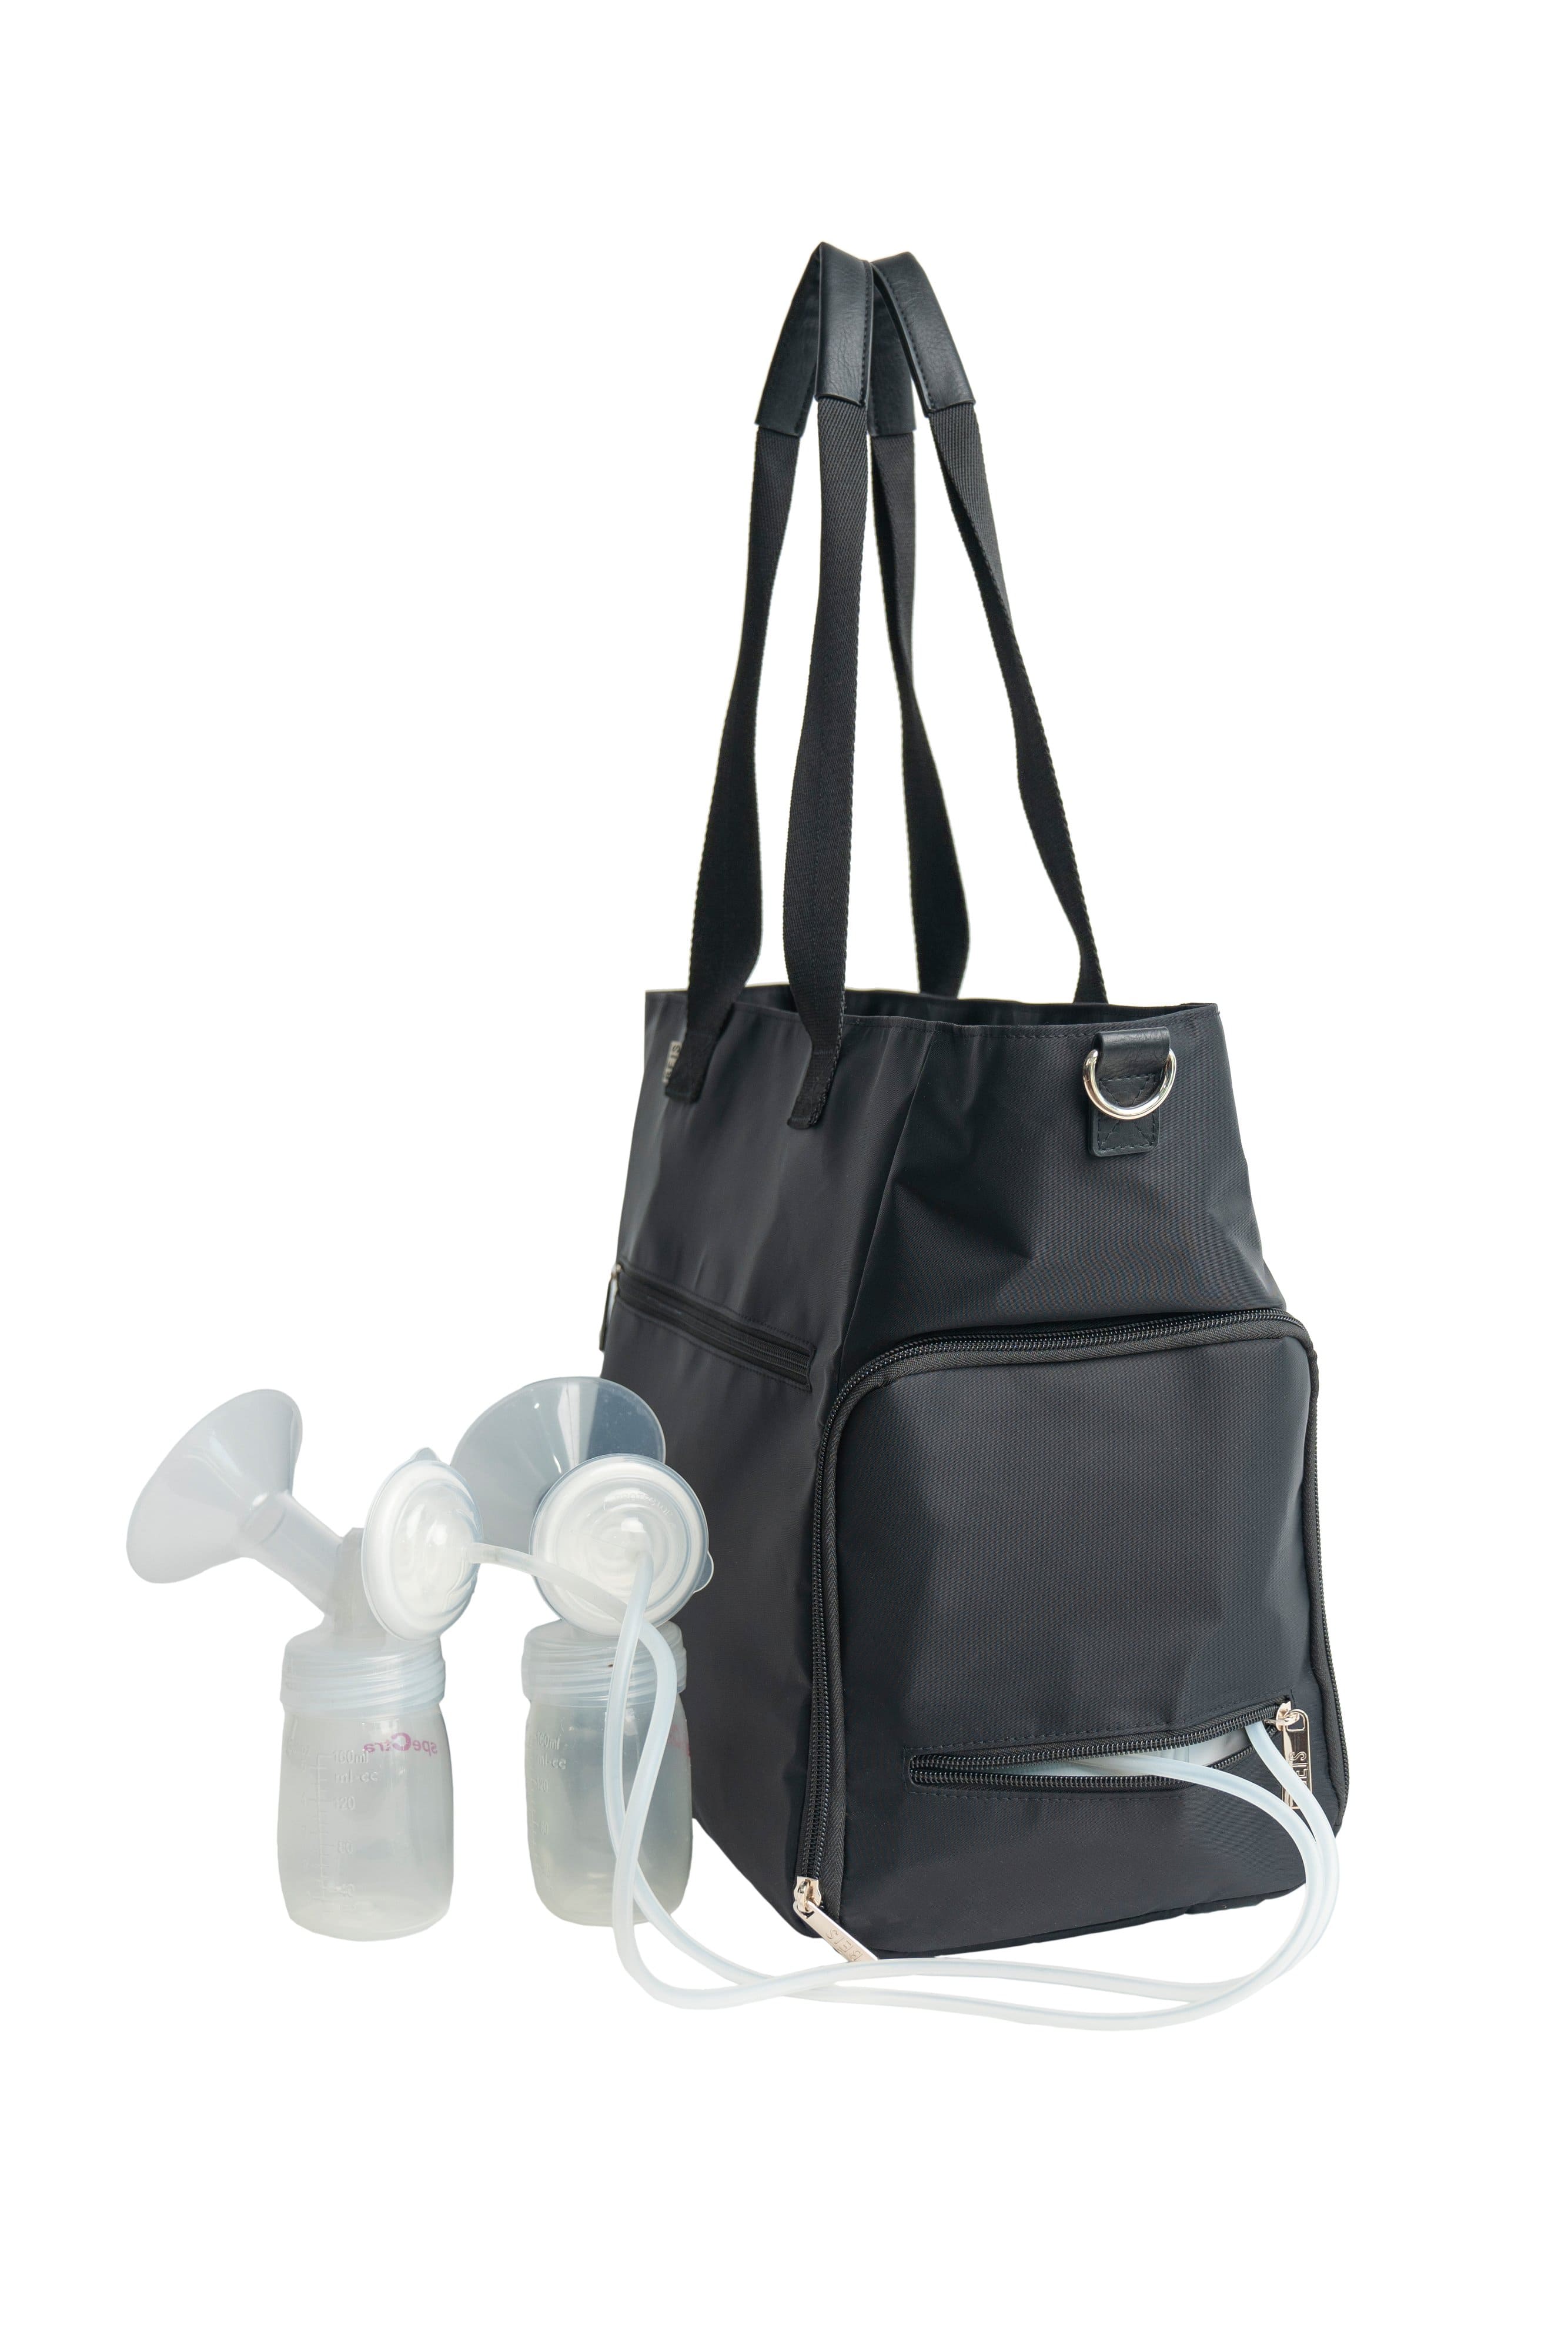 Rabjen Nurse Tote Bag for Work with Padded 15.6” Laptop Sleeve, Medical  Gray | eBay